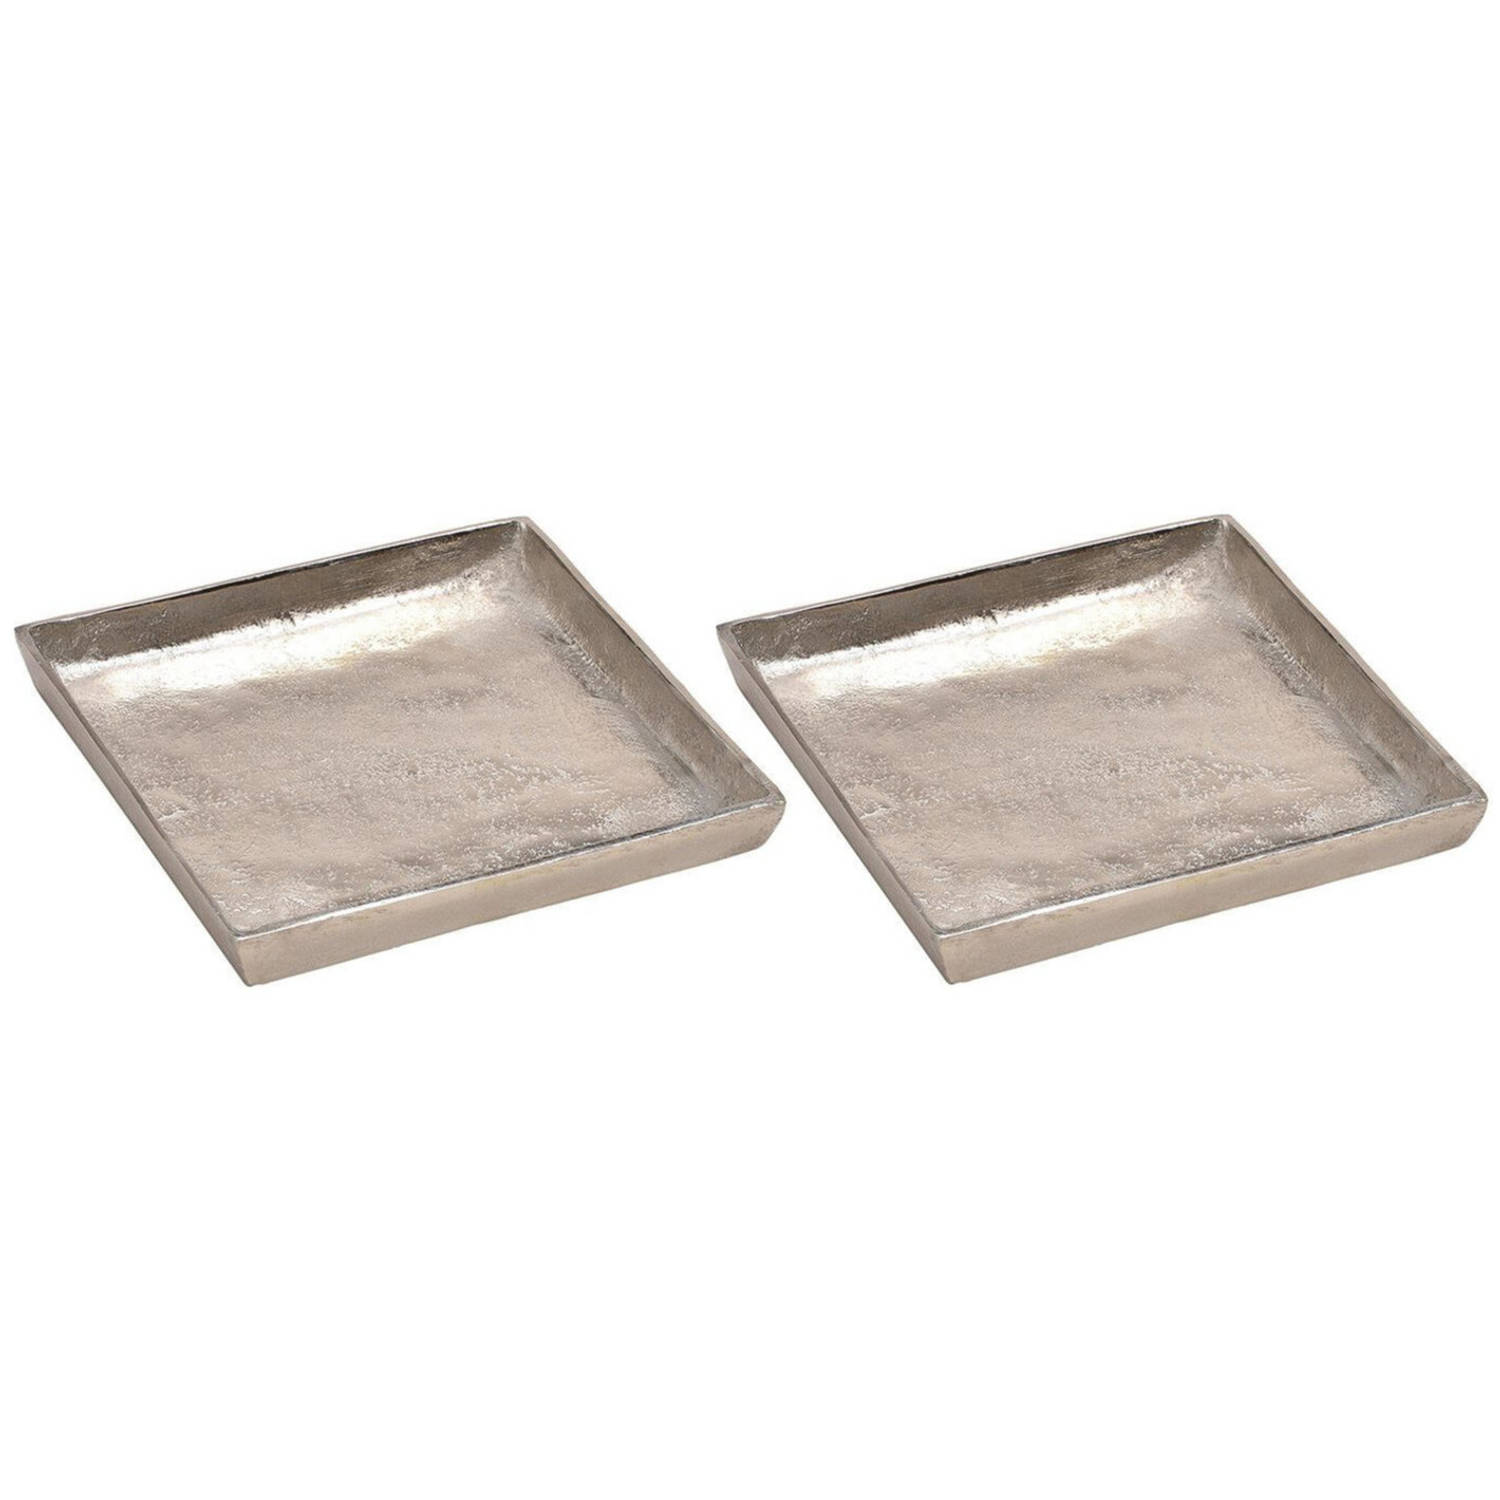 2x Woondecoratie Aluminium Dienbladen-plateaus Zilver Vierkant 20 Cm Kaarsenplateaus